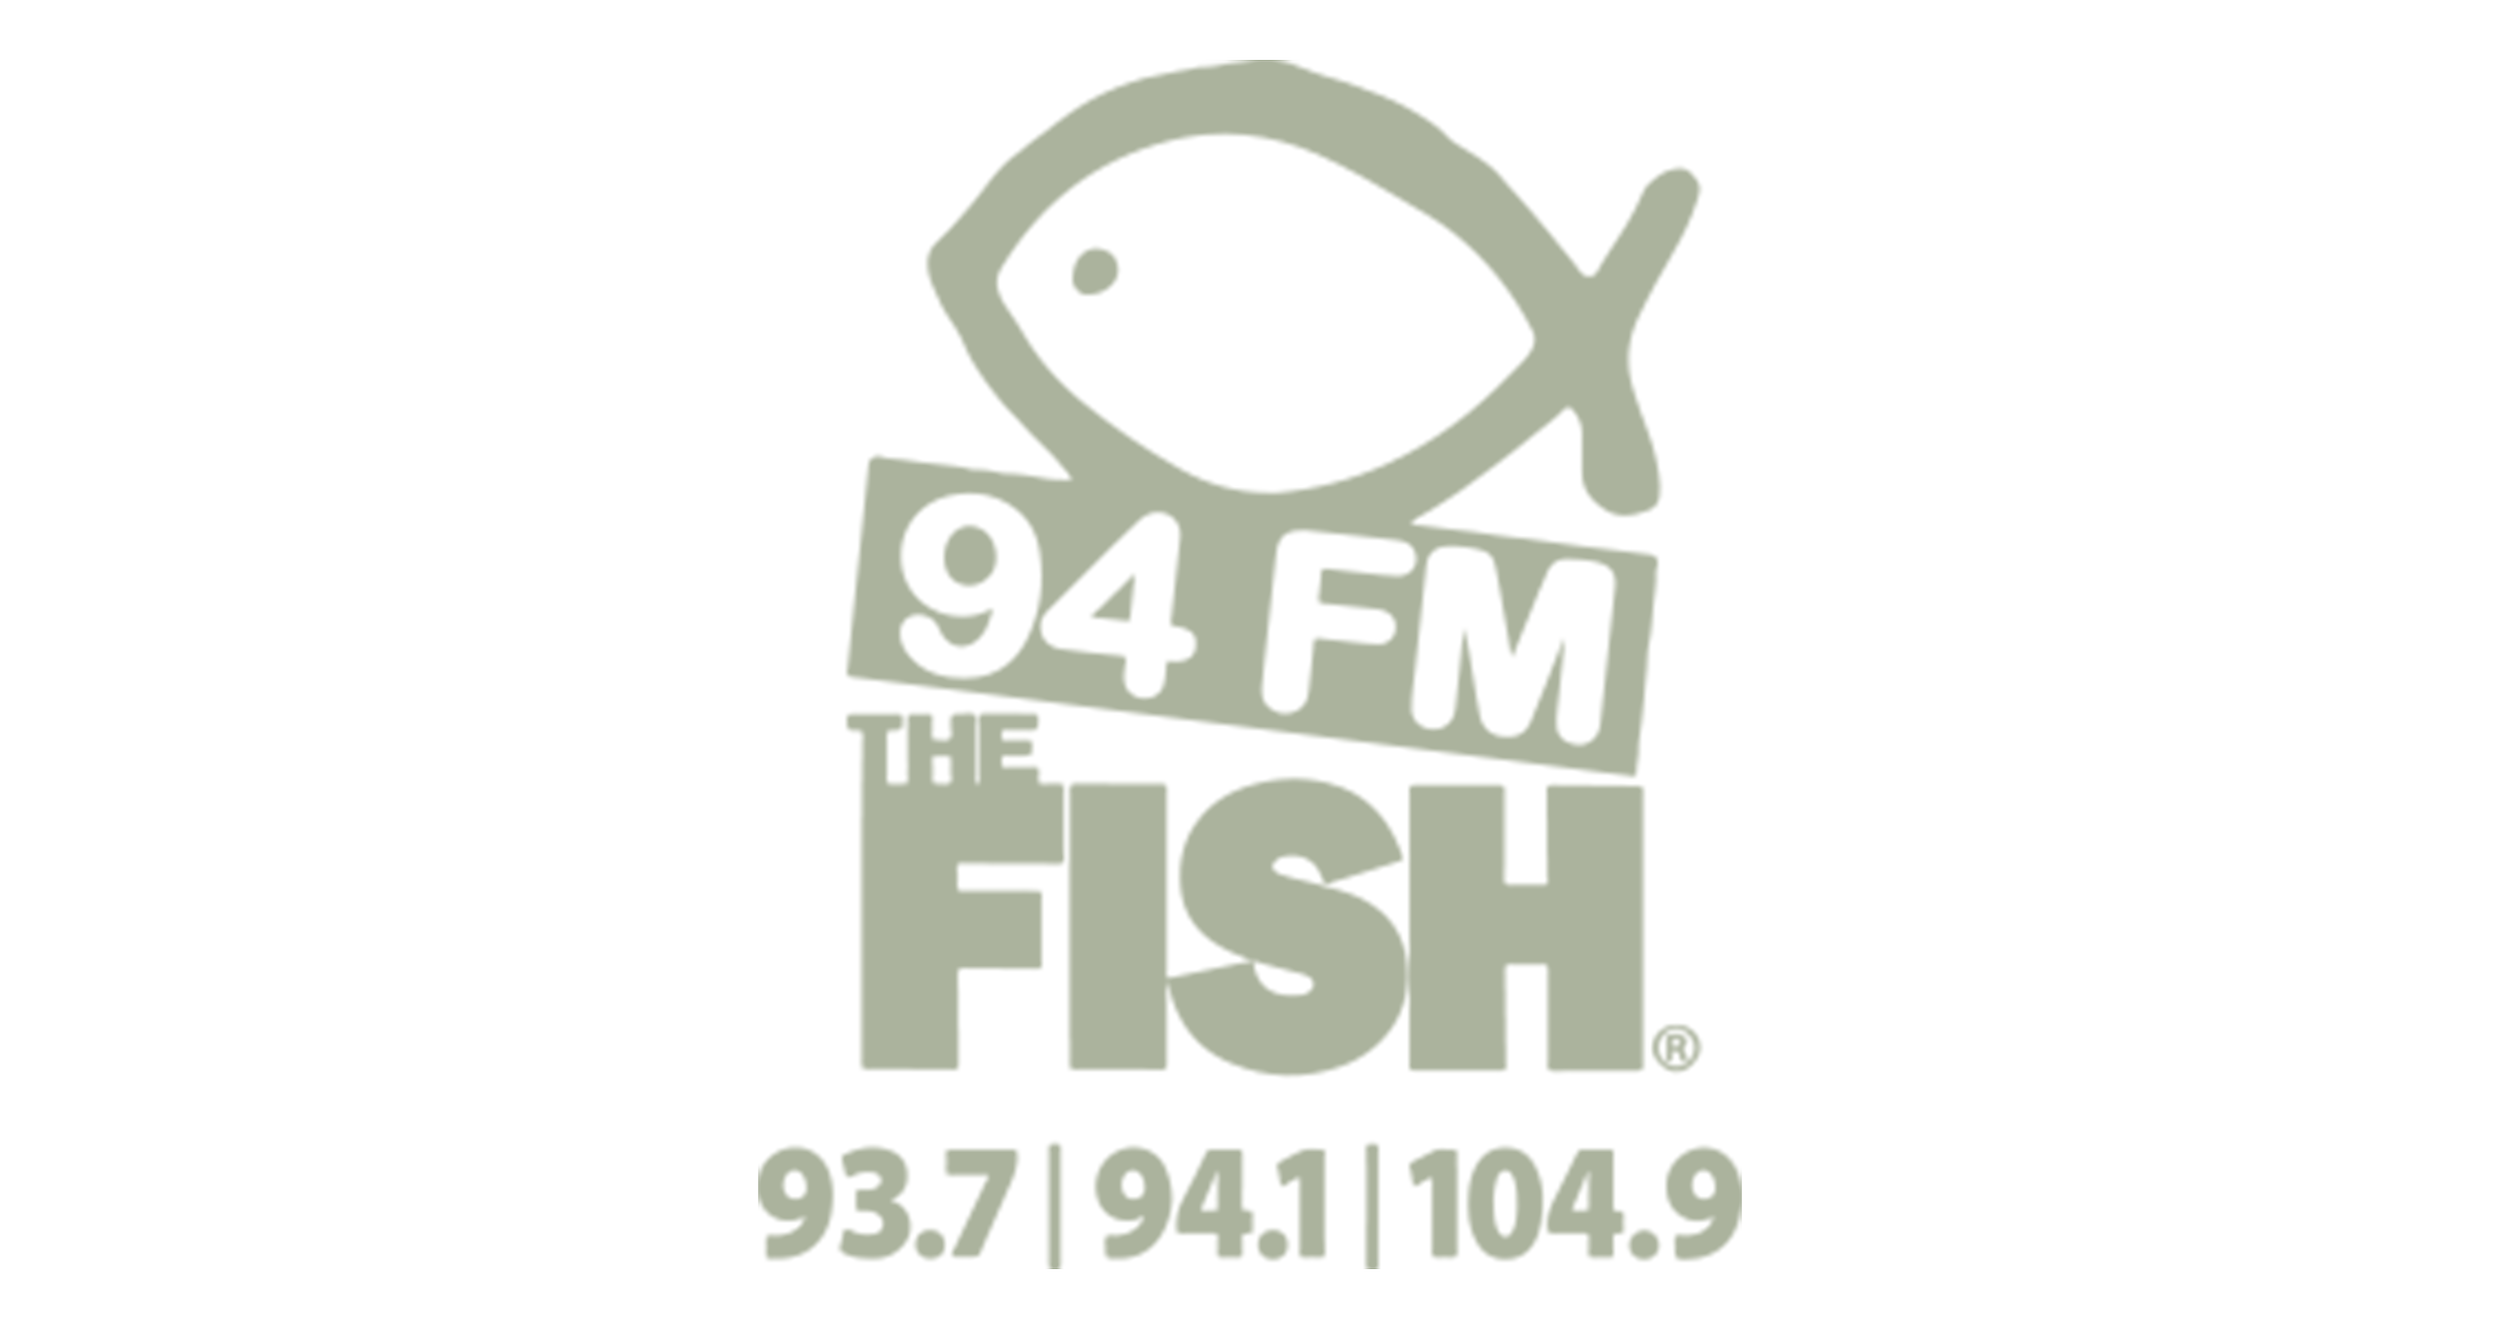 The Fish Nashville